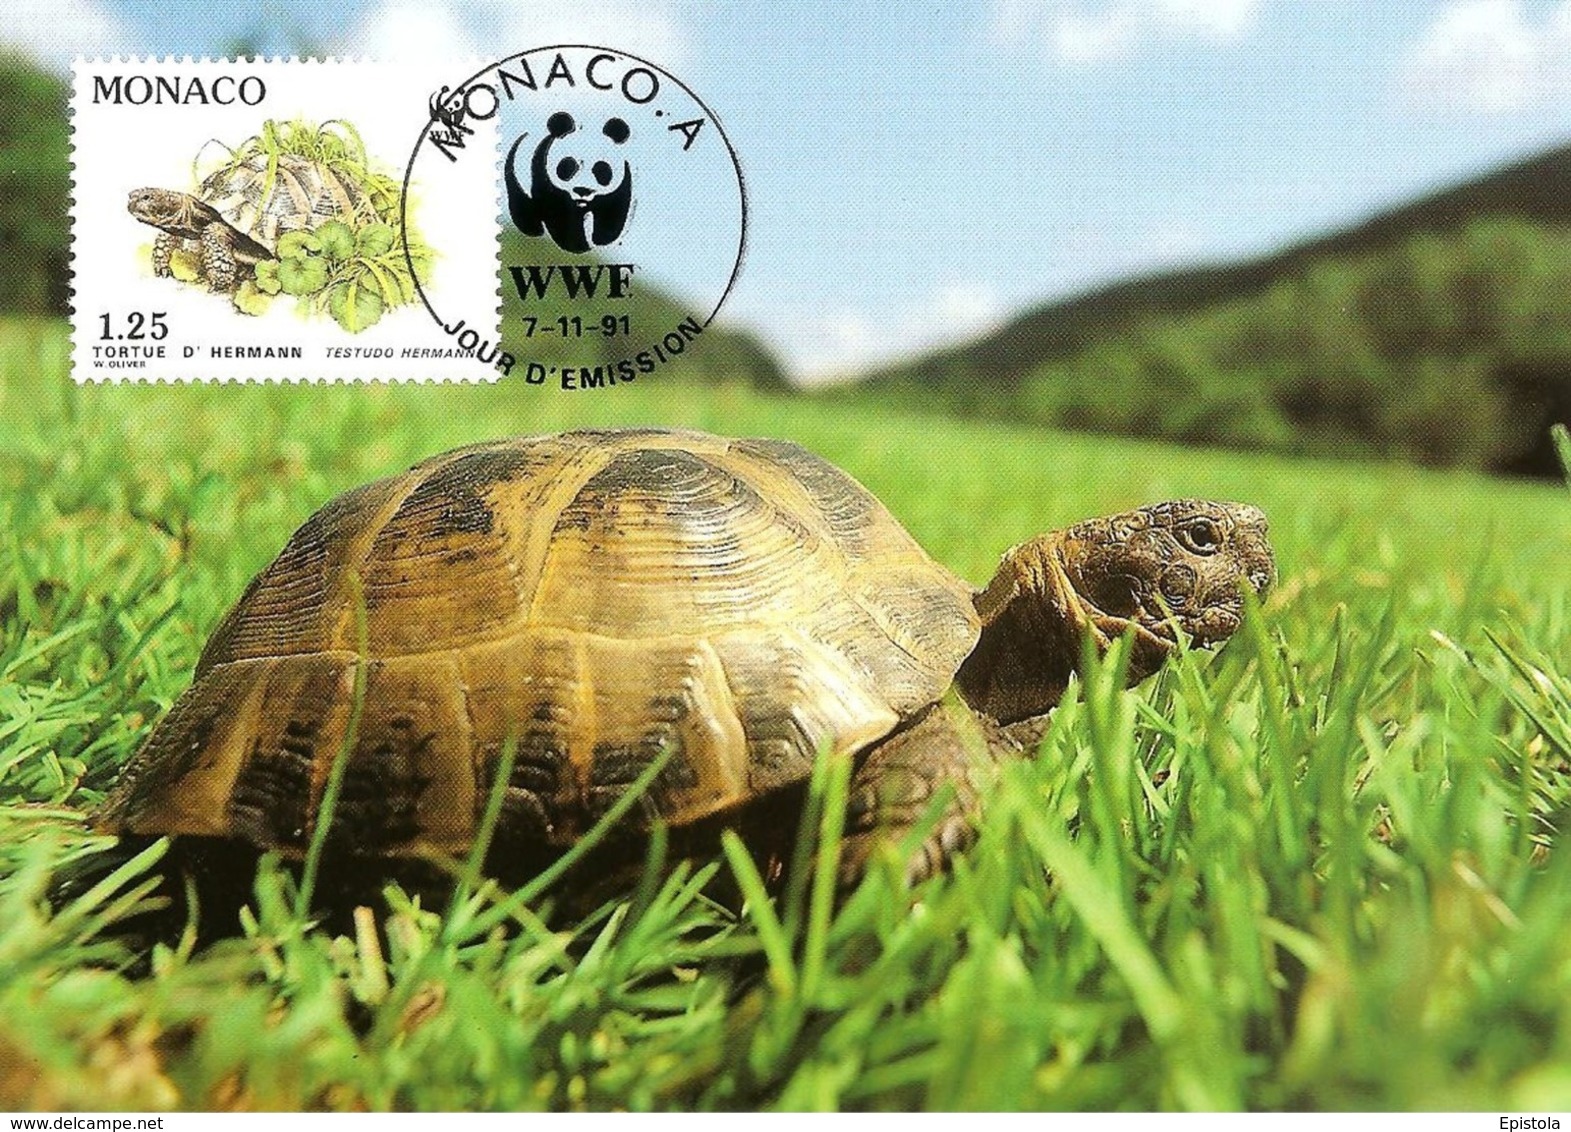 1991 - MONACO - Tortue Hermann Tortoise WWF - Collections & Lots